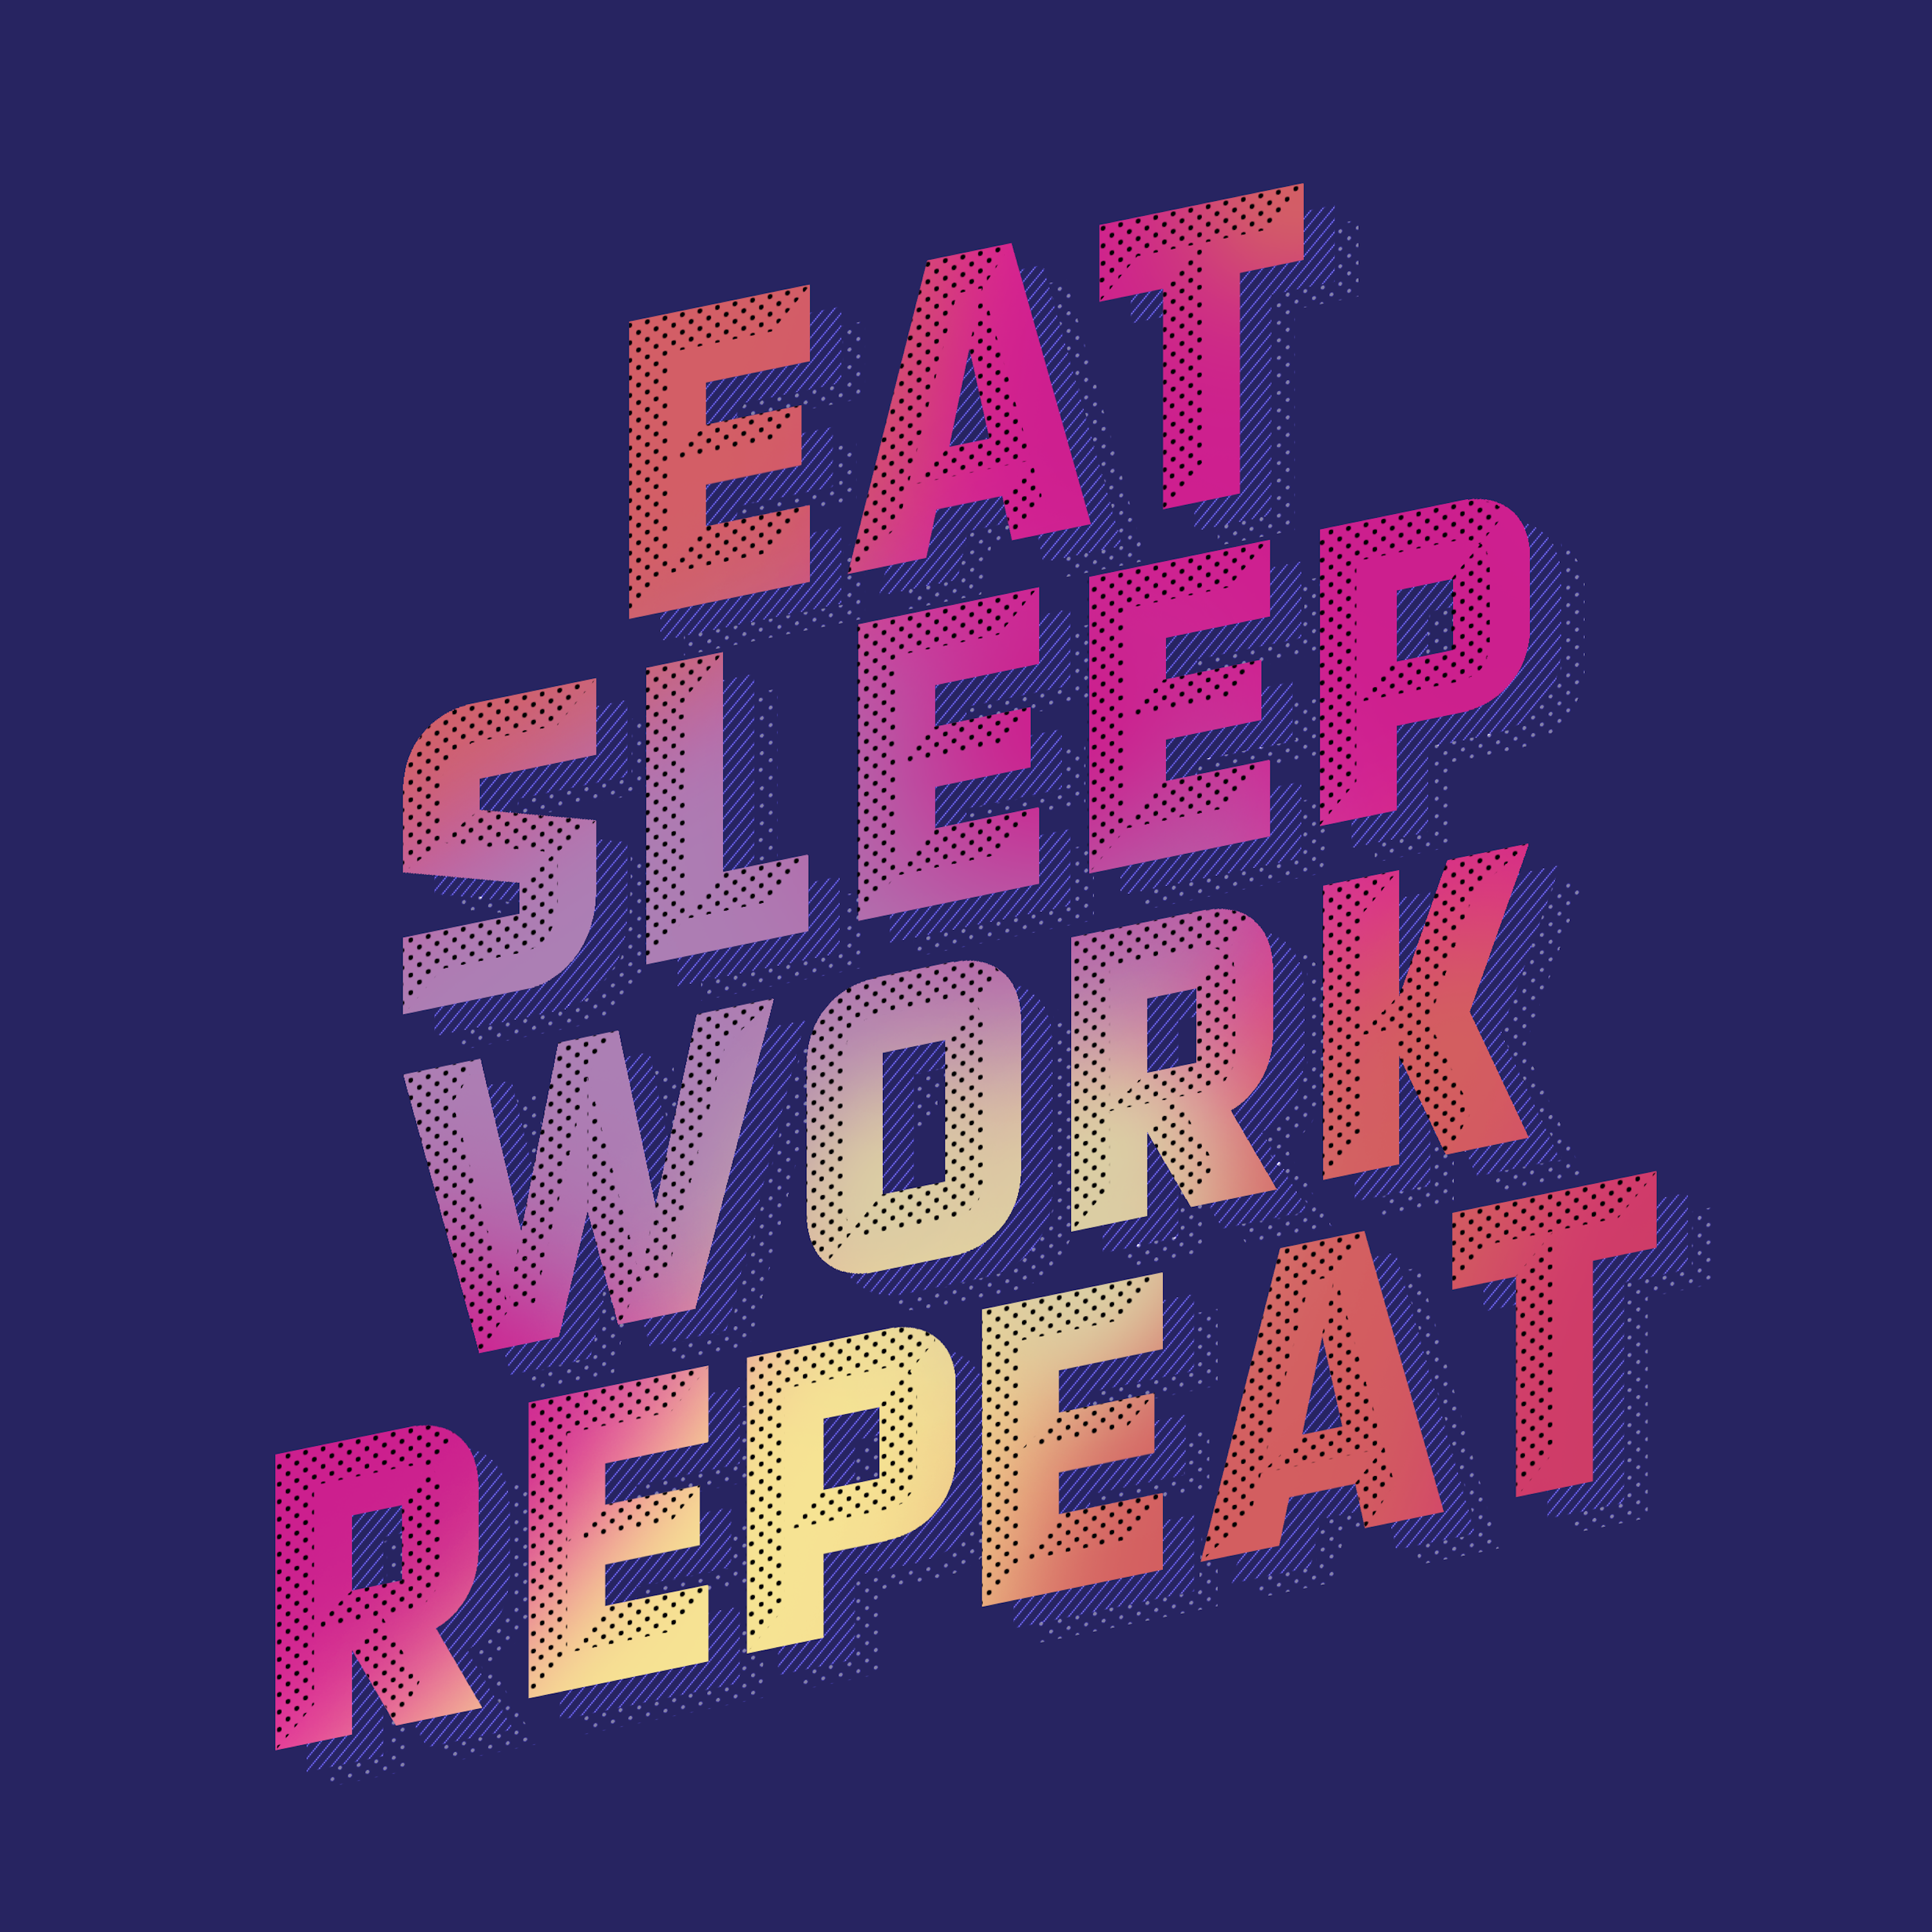 Ворк плей. Eat Sleep work repeat. Eat Sleep repeat. Ворк слип репит. Work and eat.